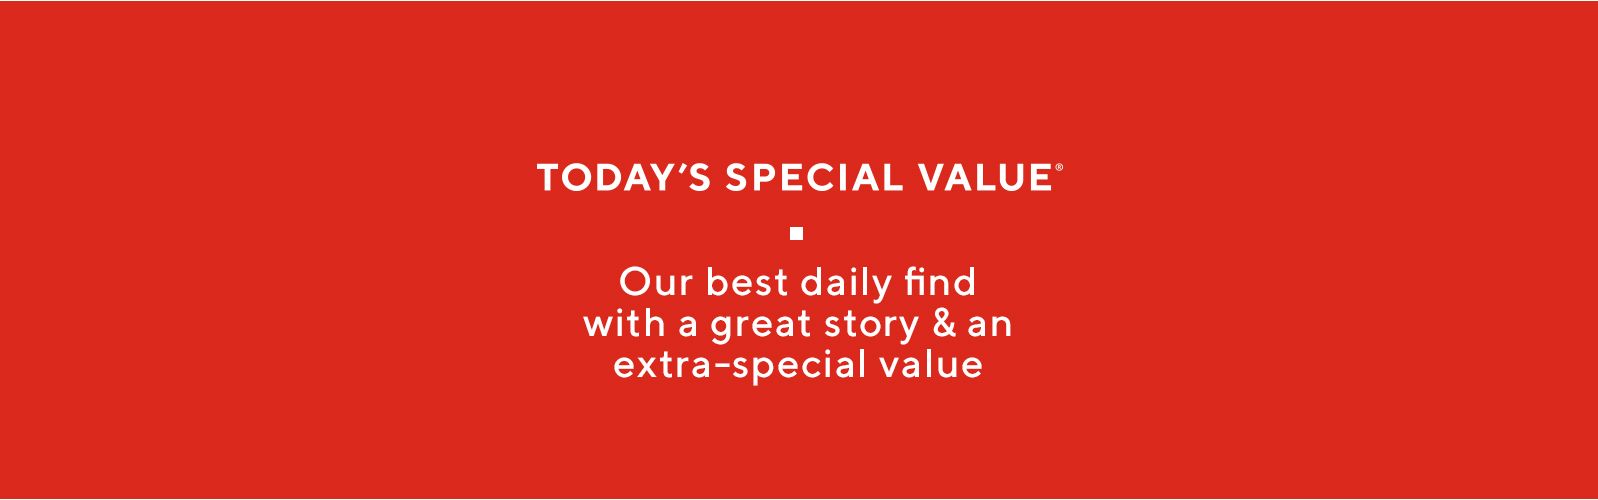 qvc vera bradley today's special value